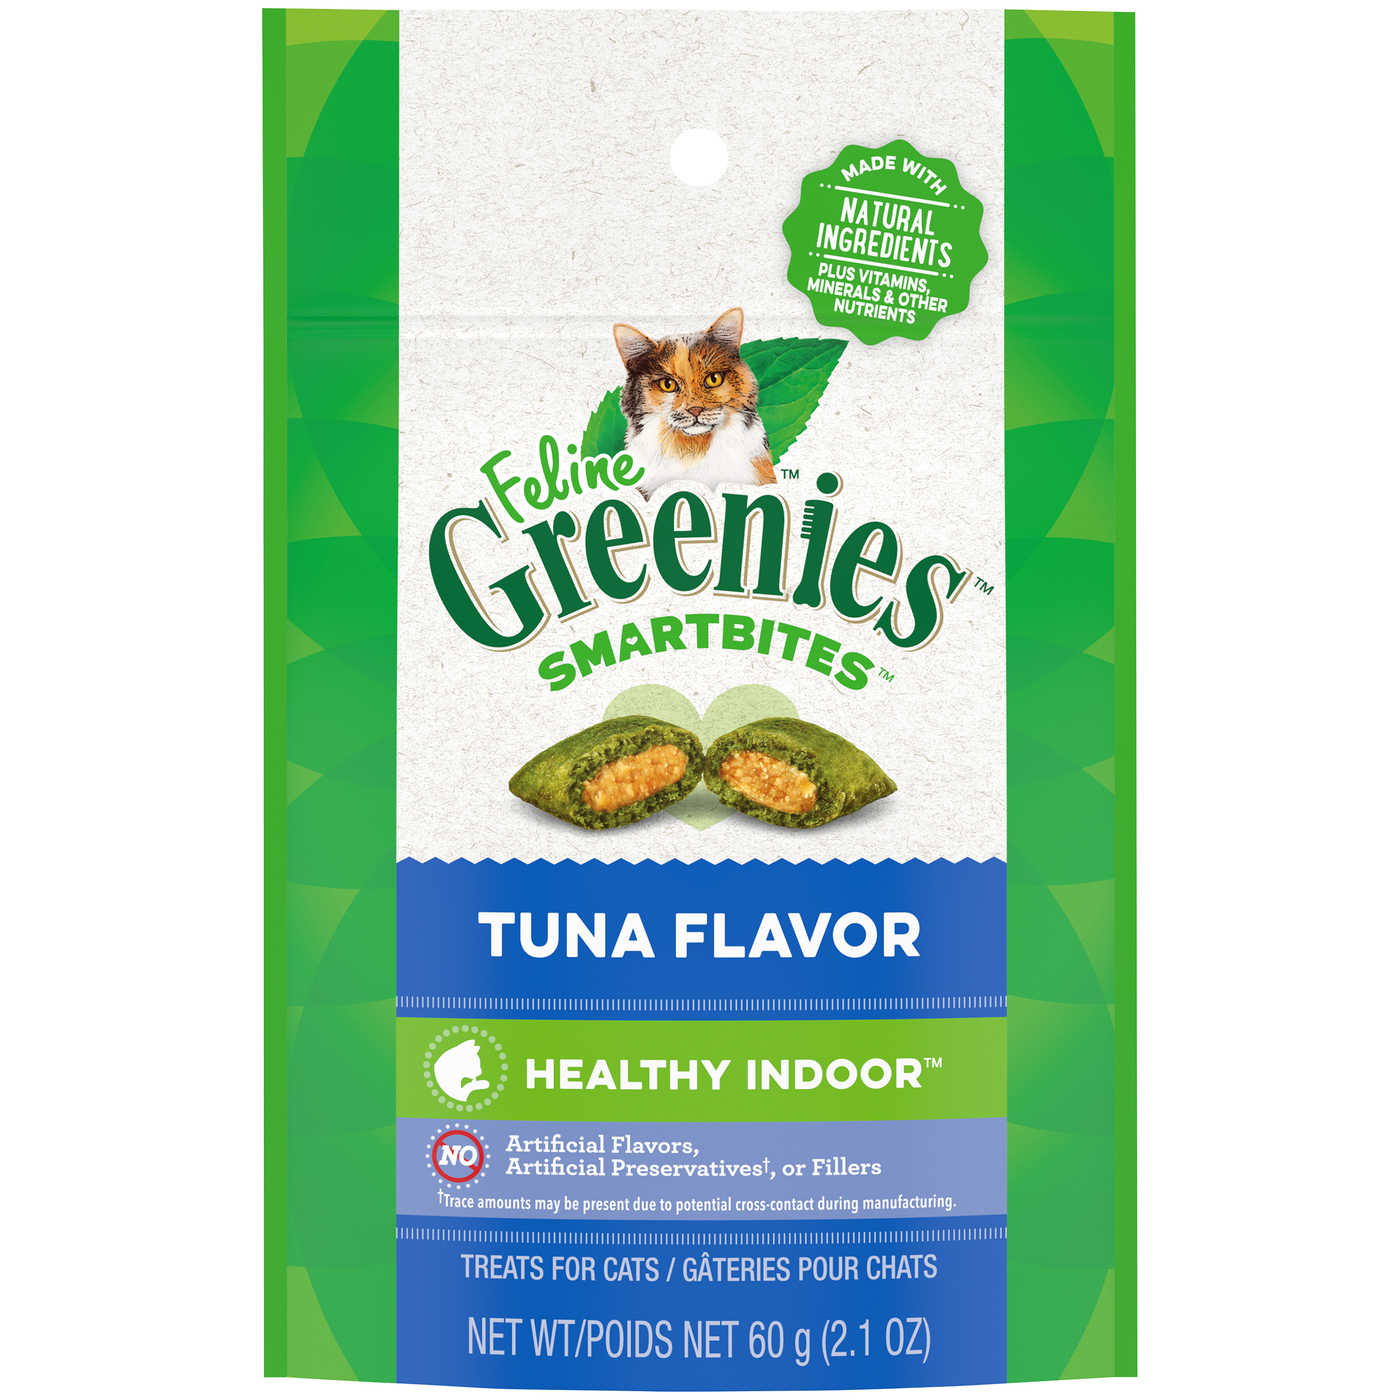 Feline Greenies Smartbites Hairball Control Tuna Flavor Cat Treats 2.1 oz.